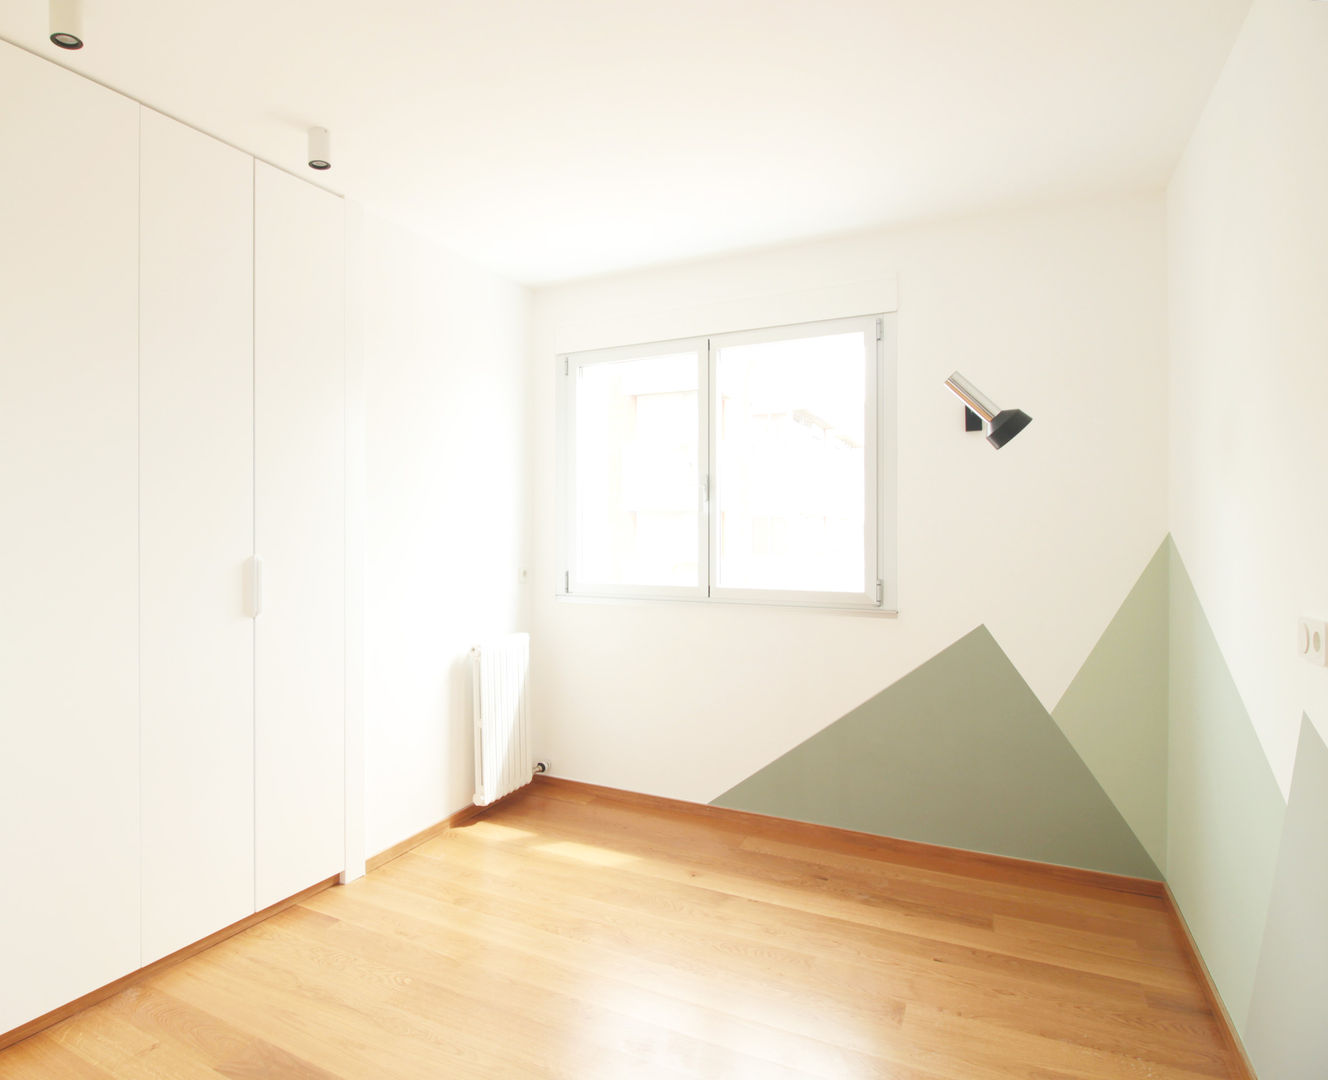 REFORMA AGT - habitación fic arquitectos Dormitorios infantiles modernos: